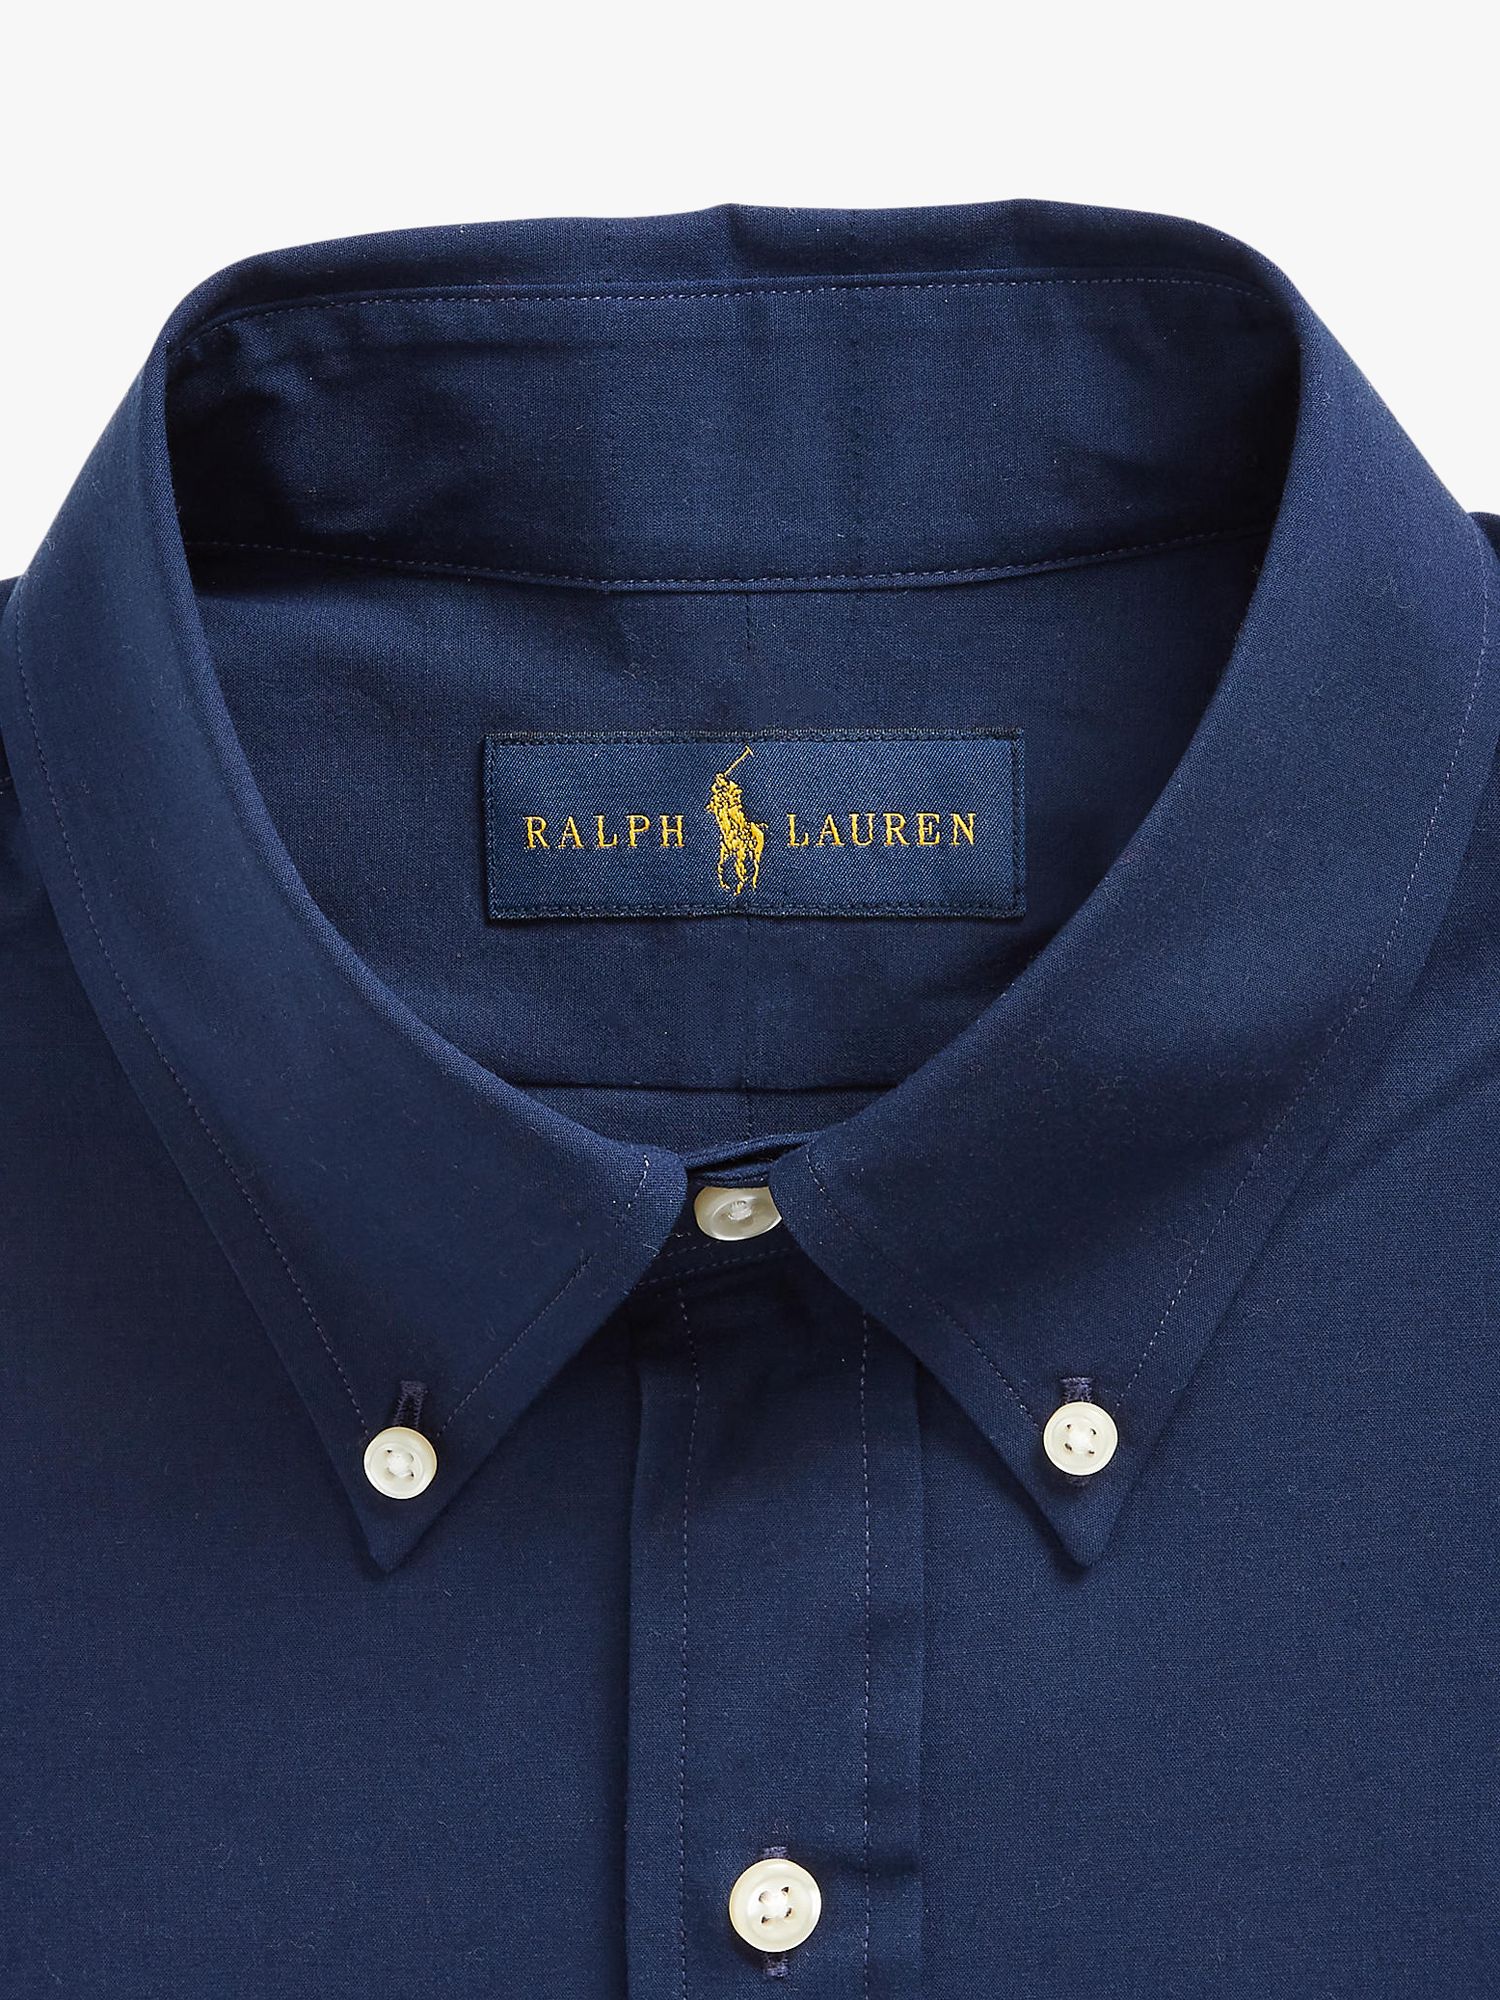 Polo Ralph Lauren Slim Fit Stretch Poplin Shirt, Navy, S